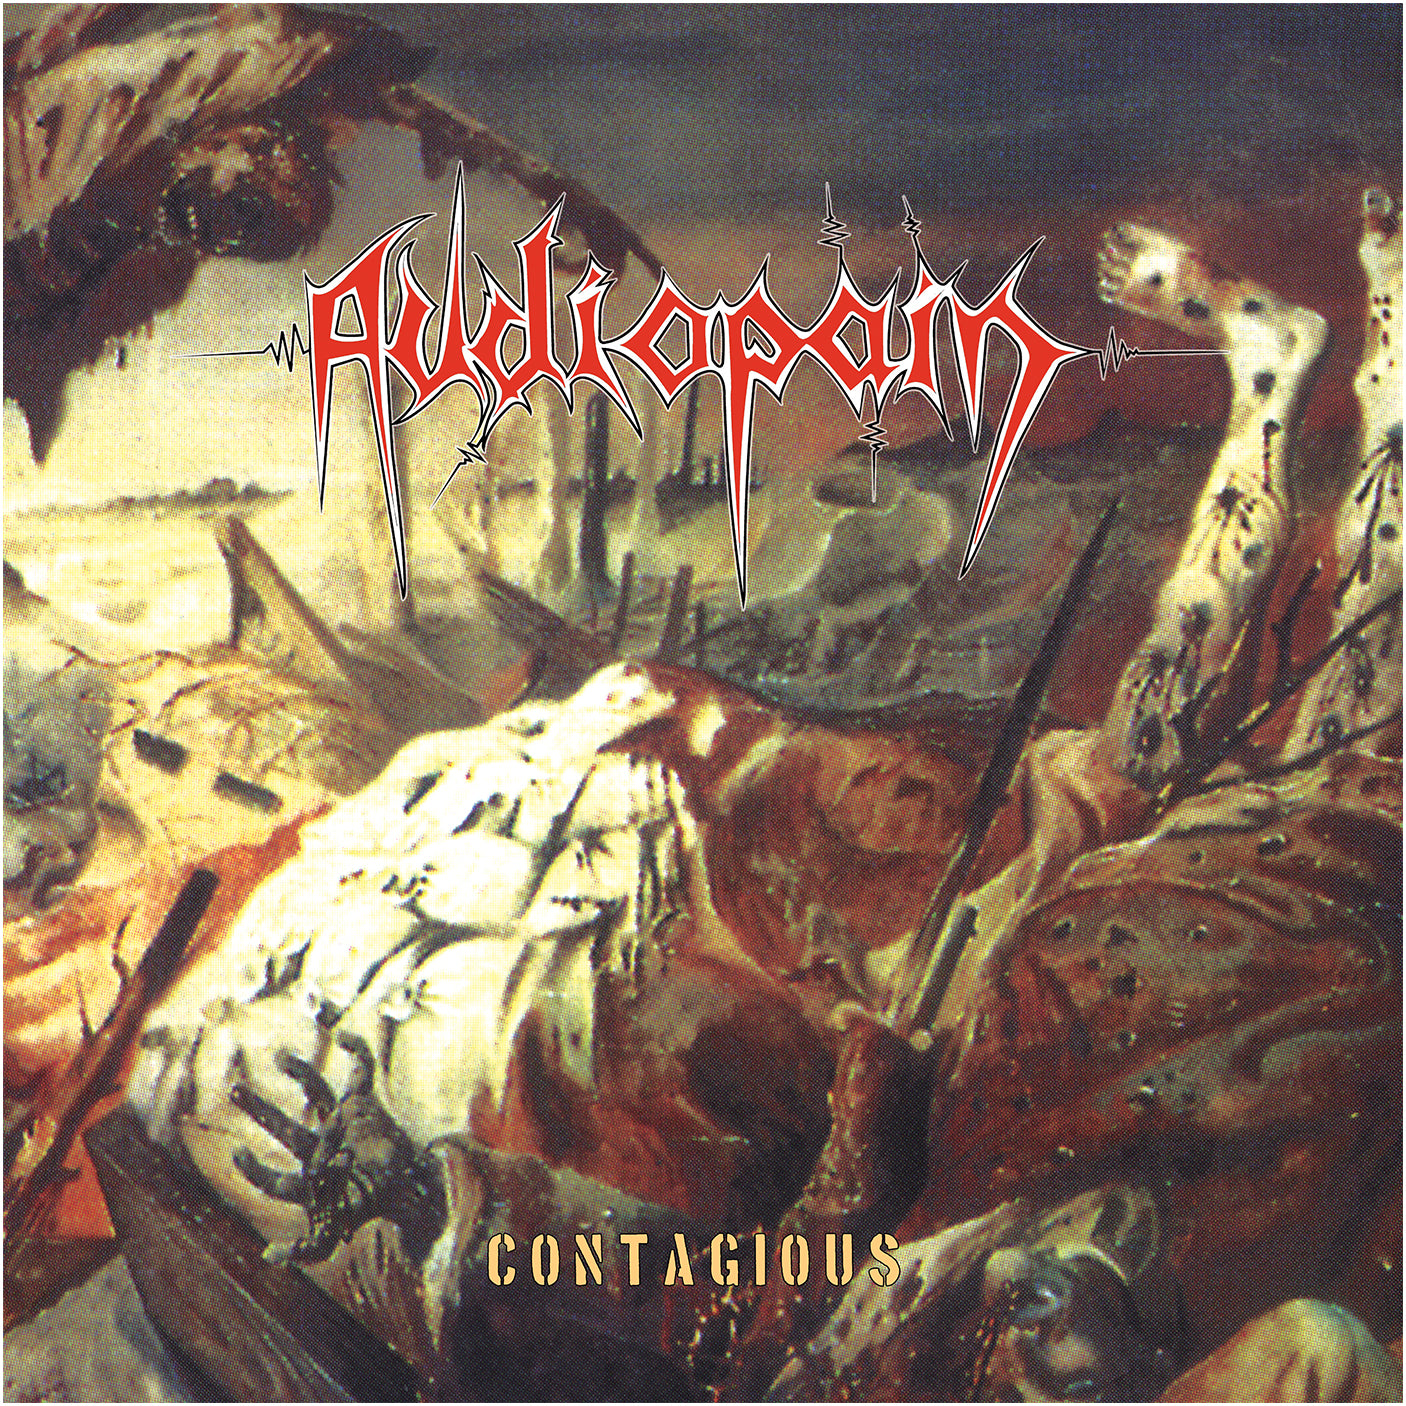 AUDIOPAIN - Contagious LP (GOLD)